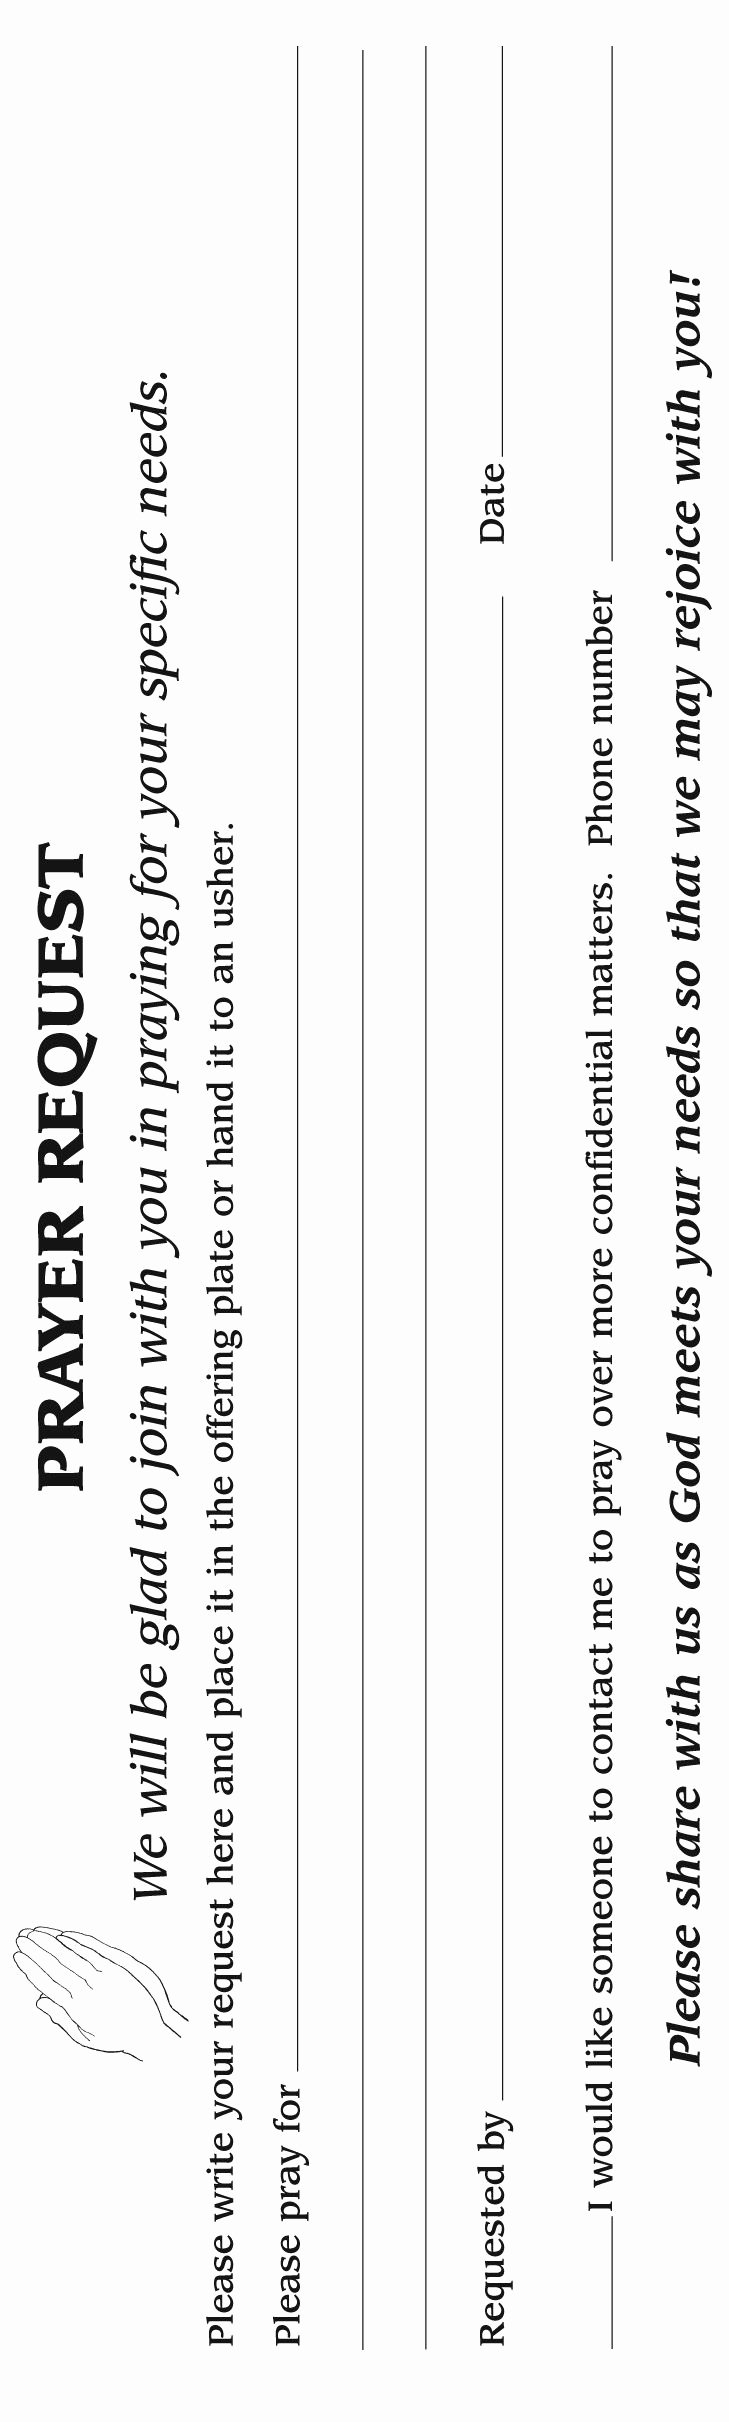 Prayer Request Cards Free Printables Inspirational Free Printable Prayer Request